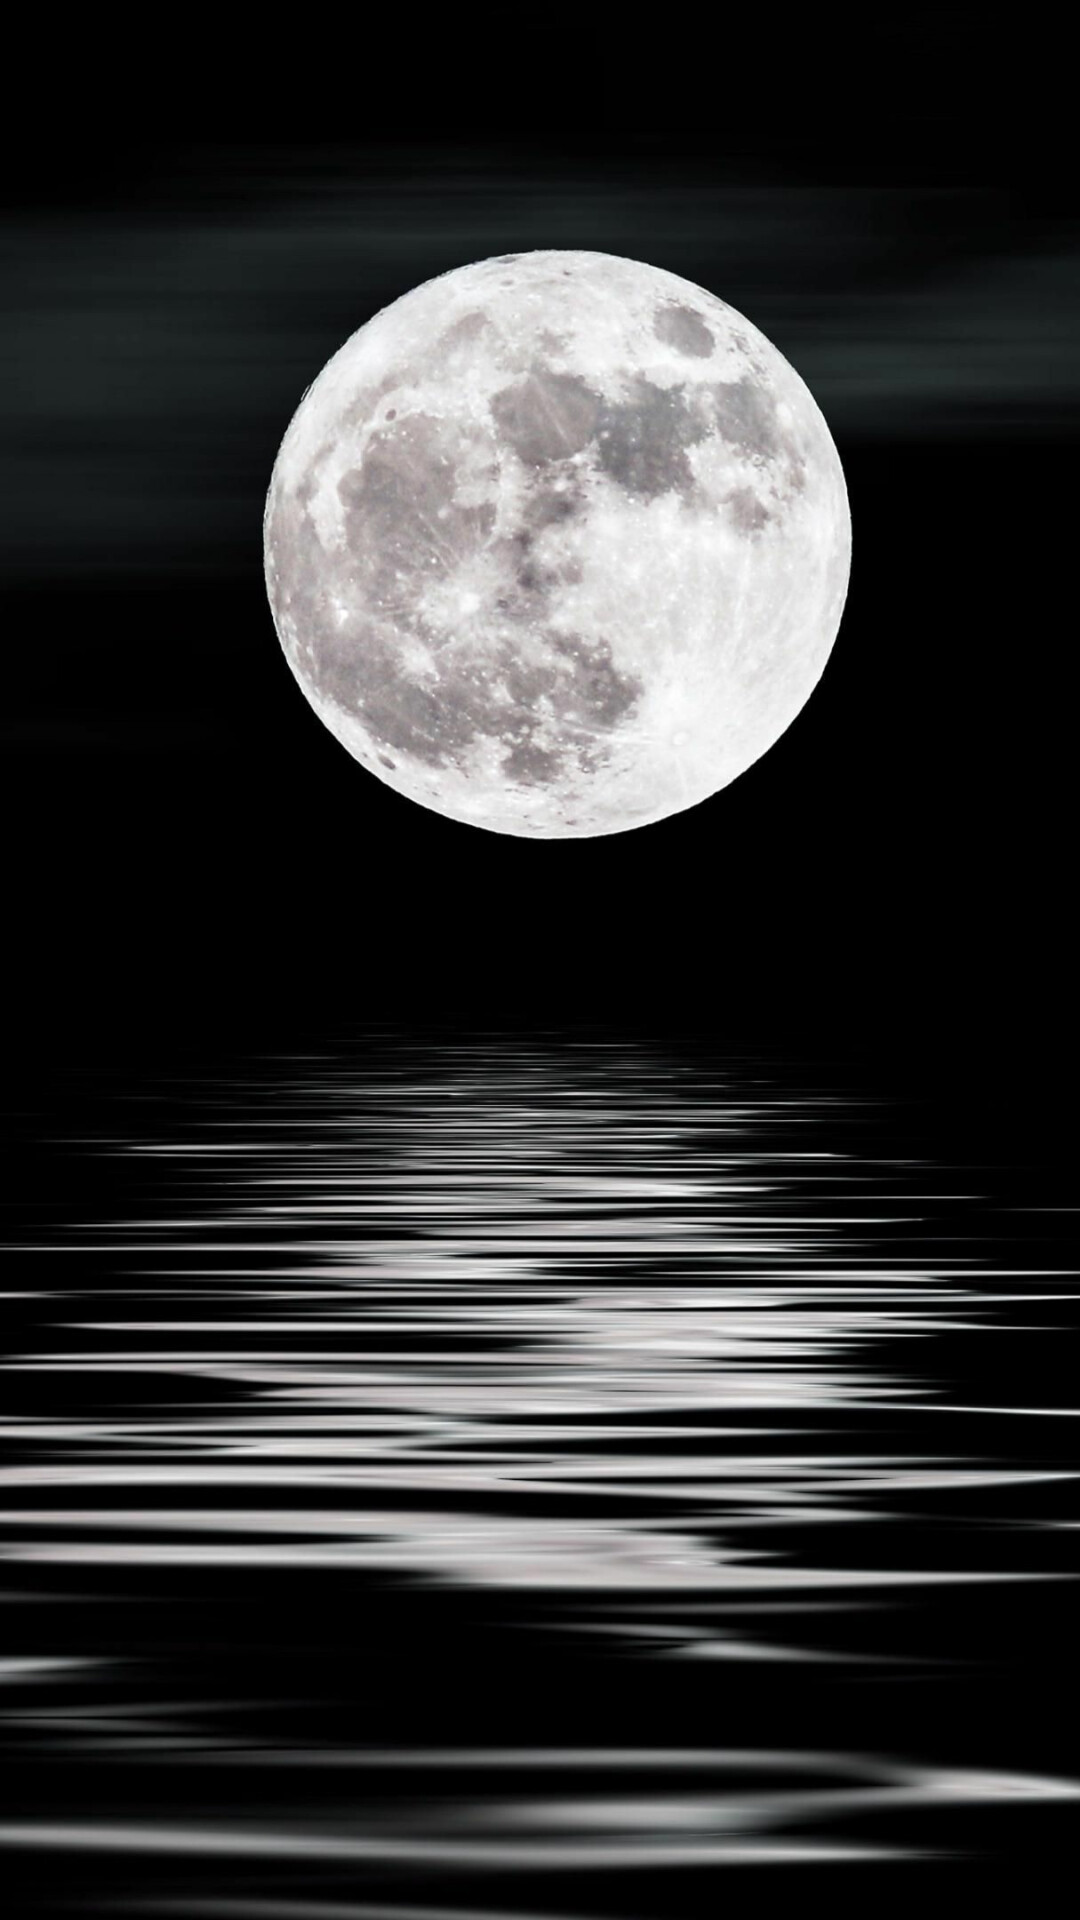 Moonlight: Full Moon, The lunar phase. 1080x1920 Full HD Wallpaper.